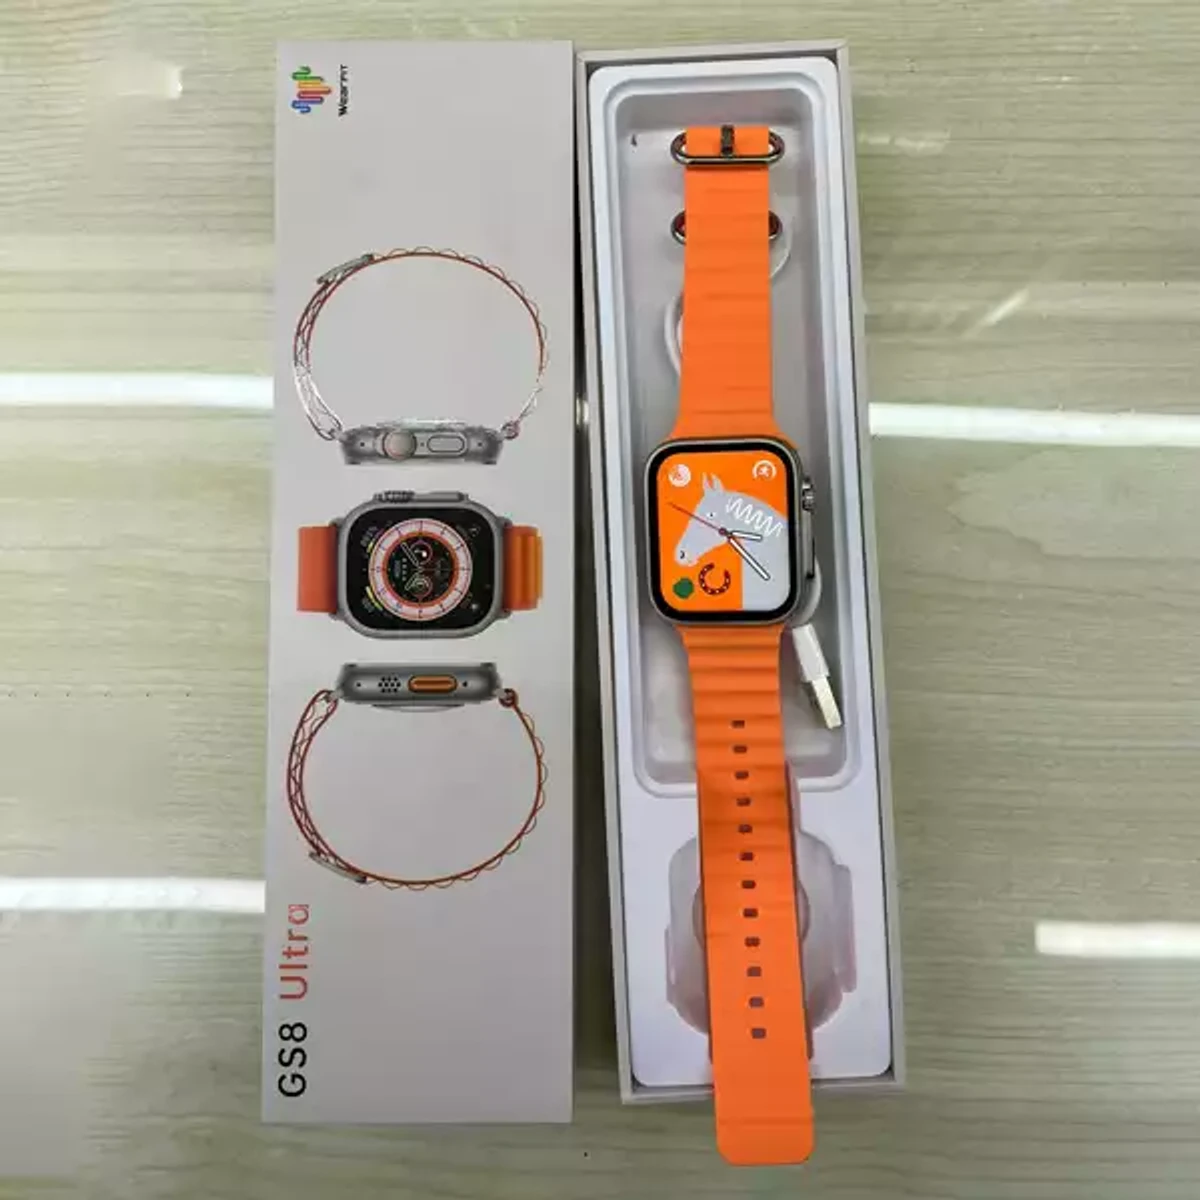 GS8 Ultra Smart Watch